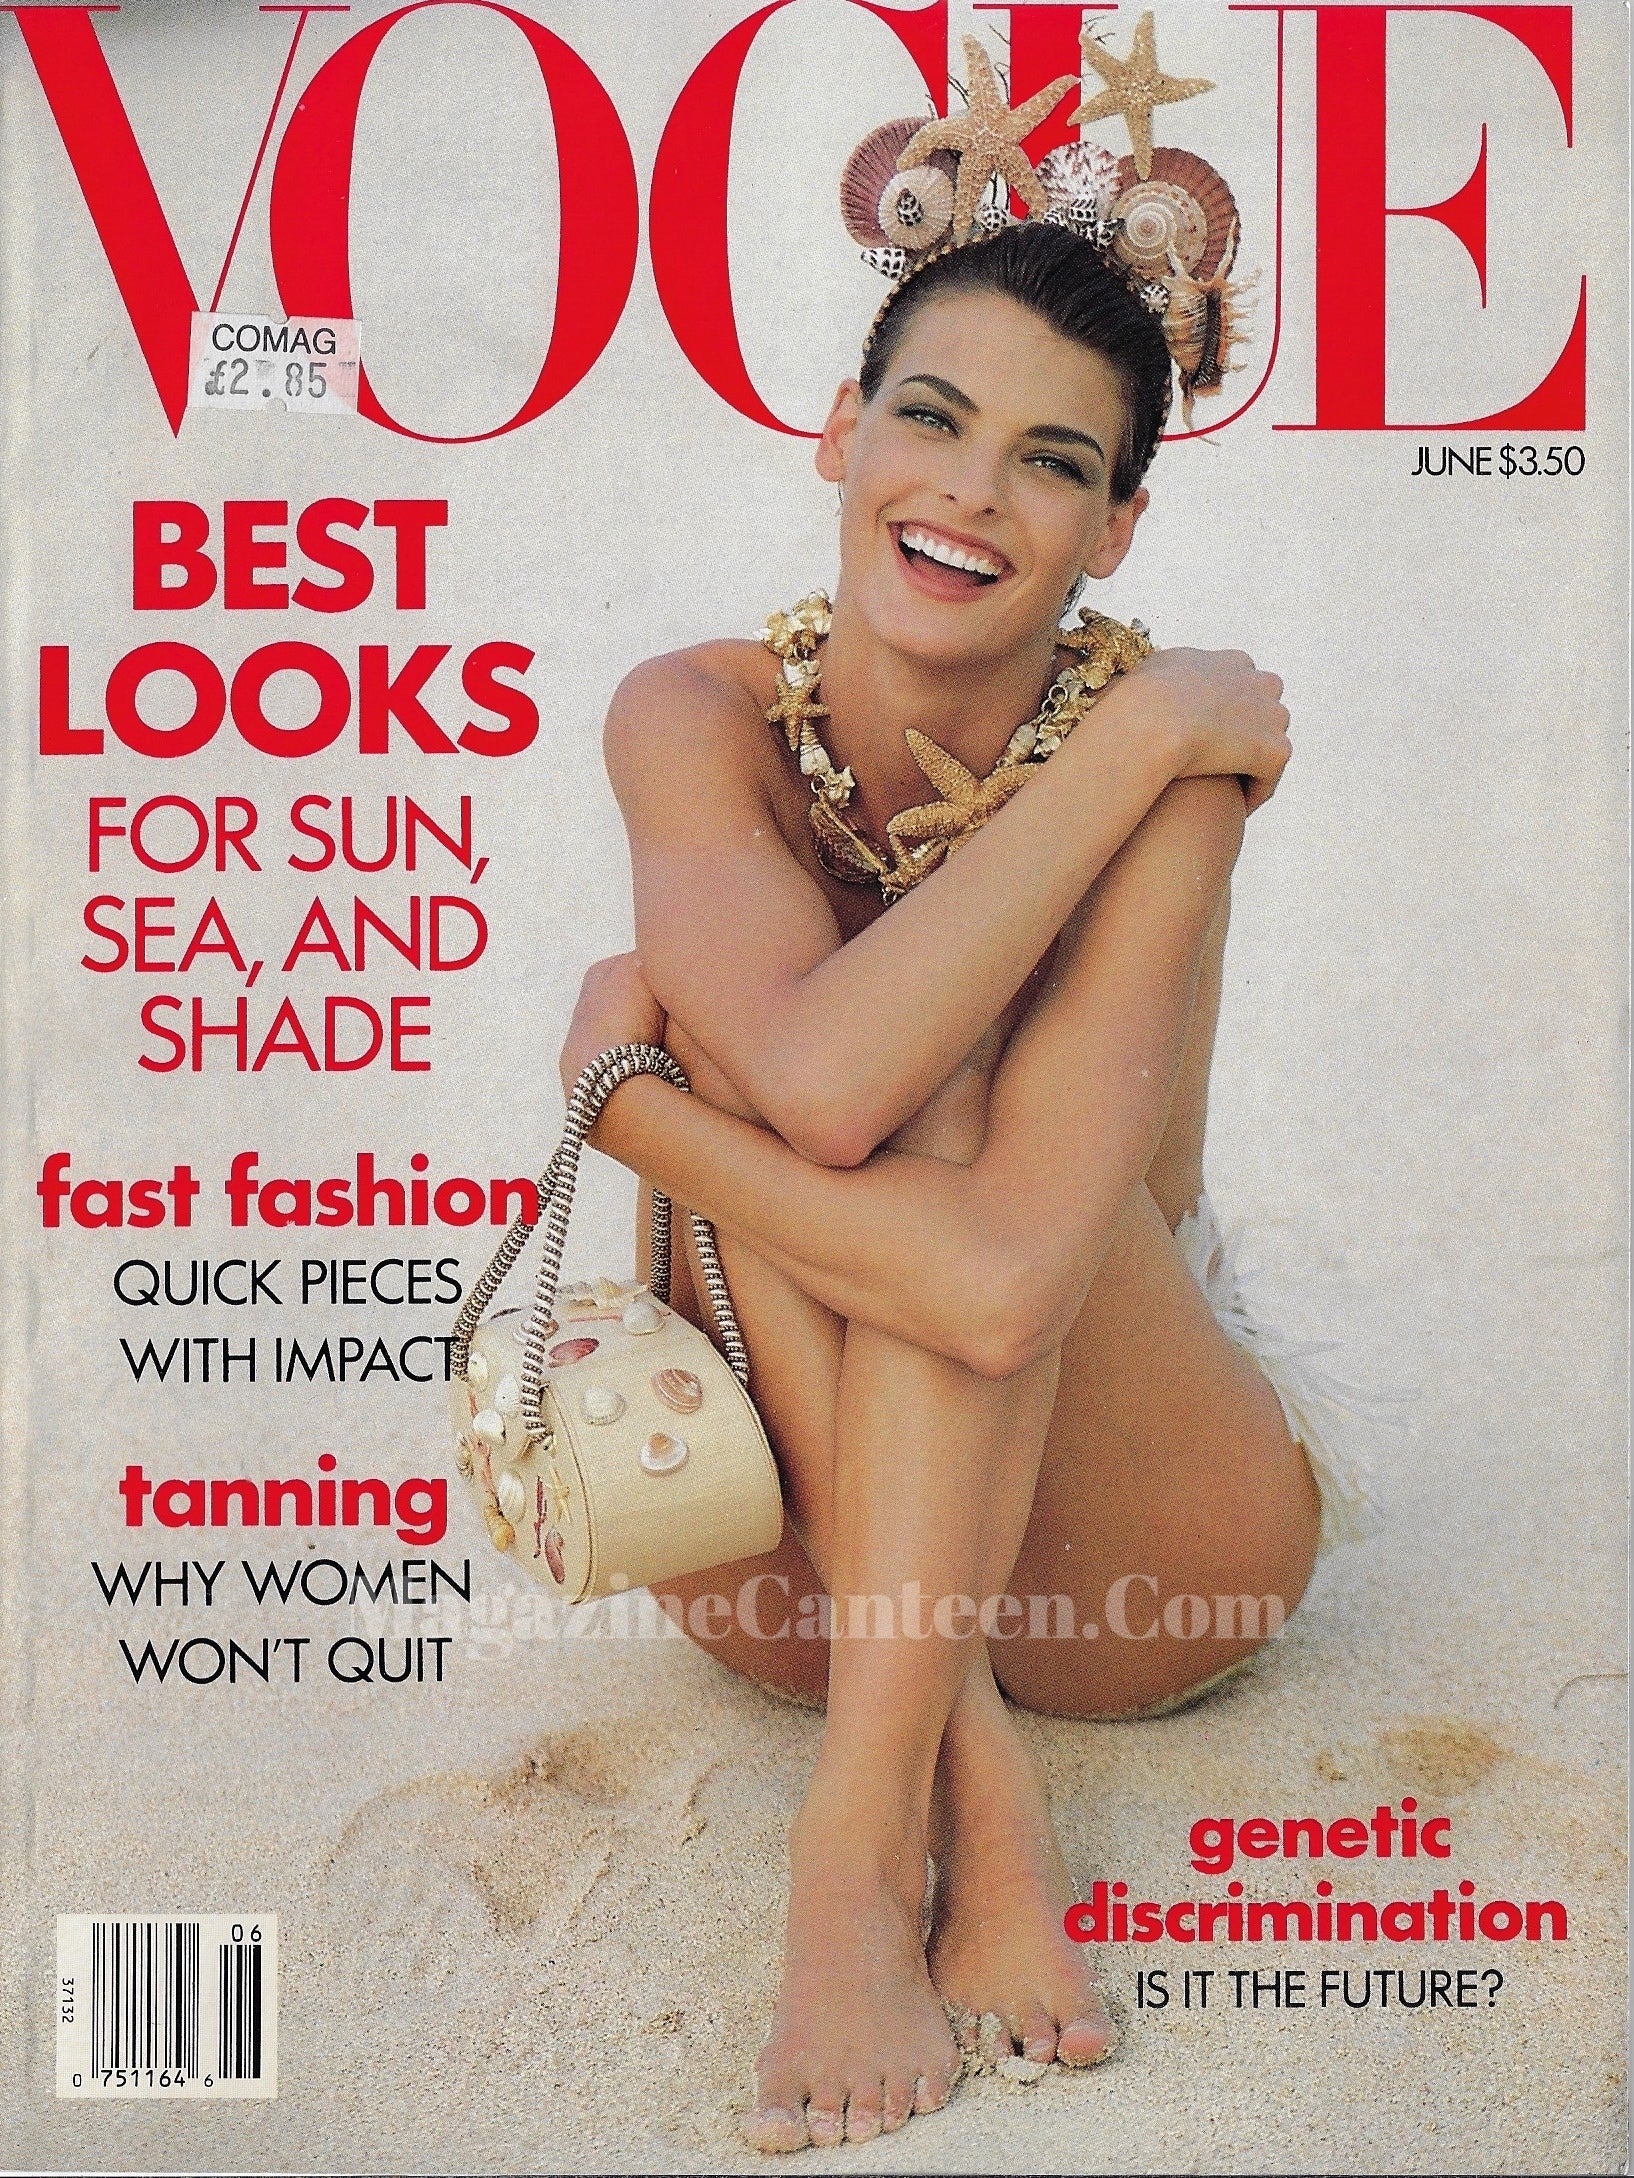 Vogue USA Magazine June 1990 - Linda Evangelista